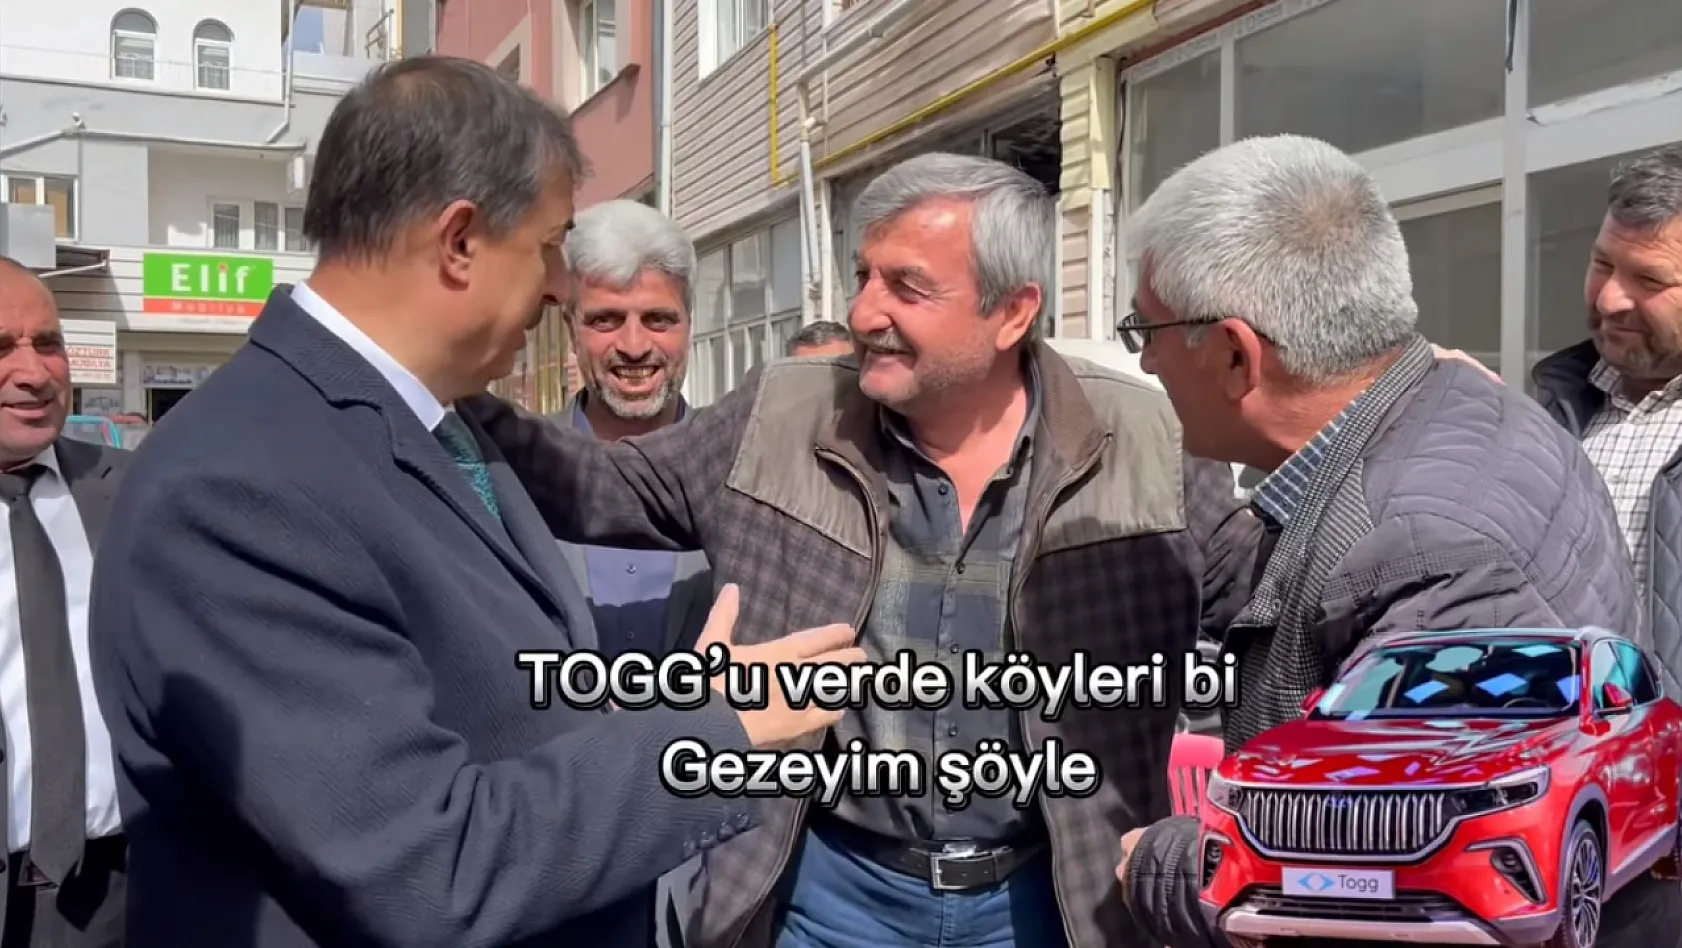 AK Partili Başkan vatandaştan TOGG'unu istedi!